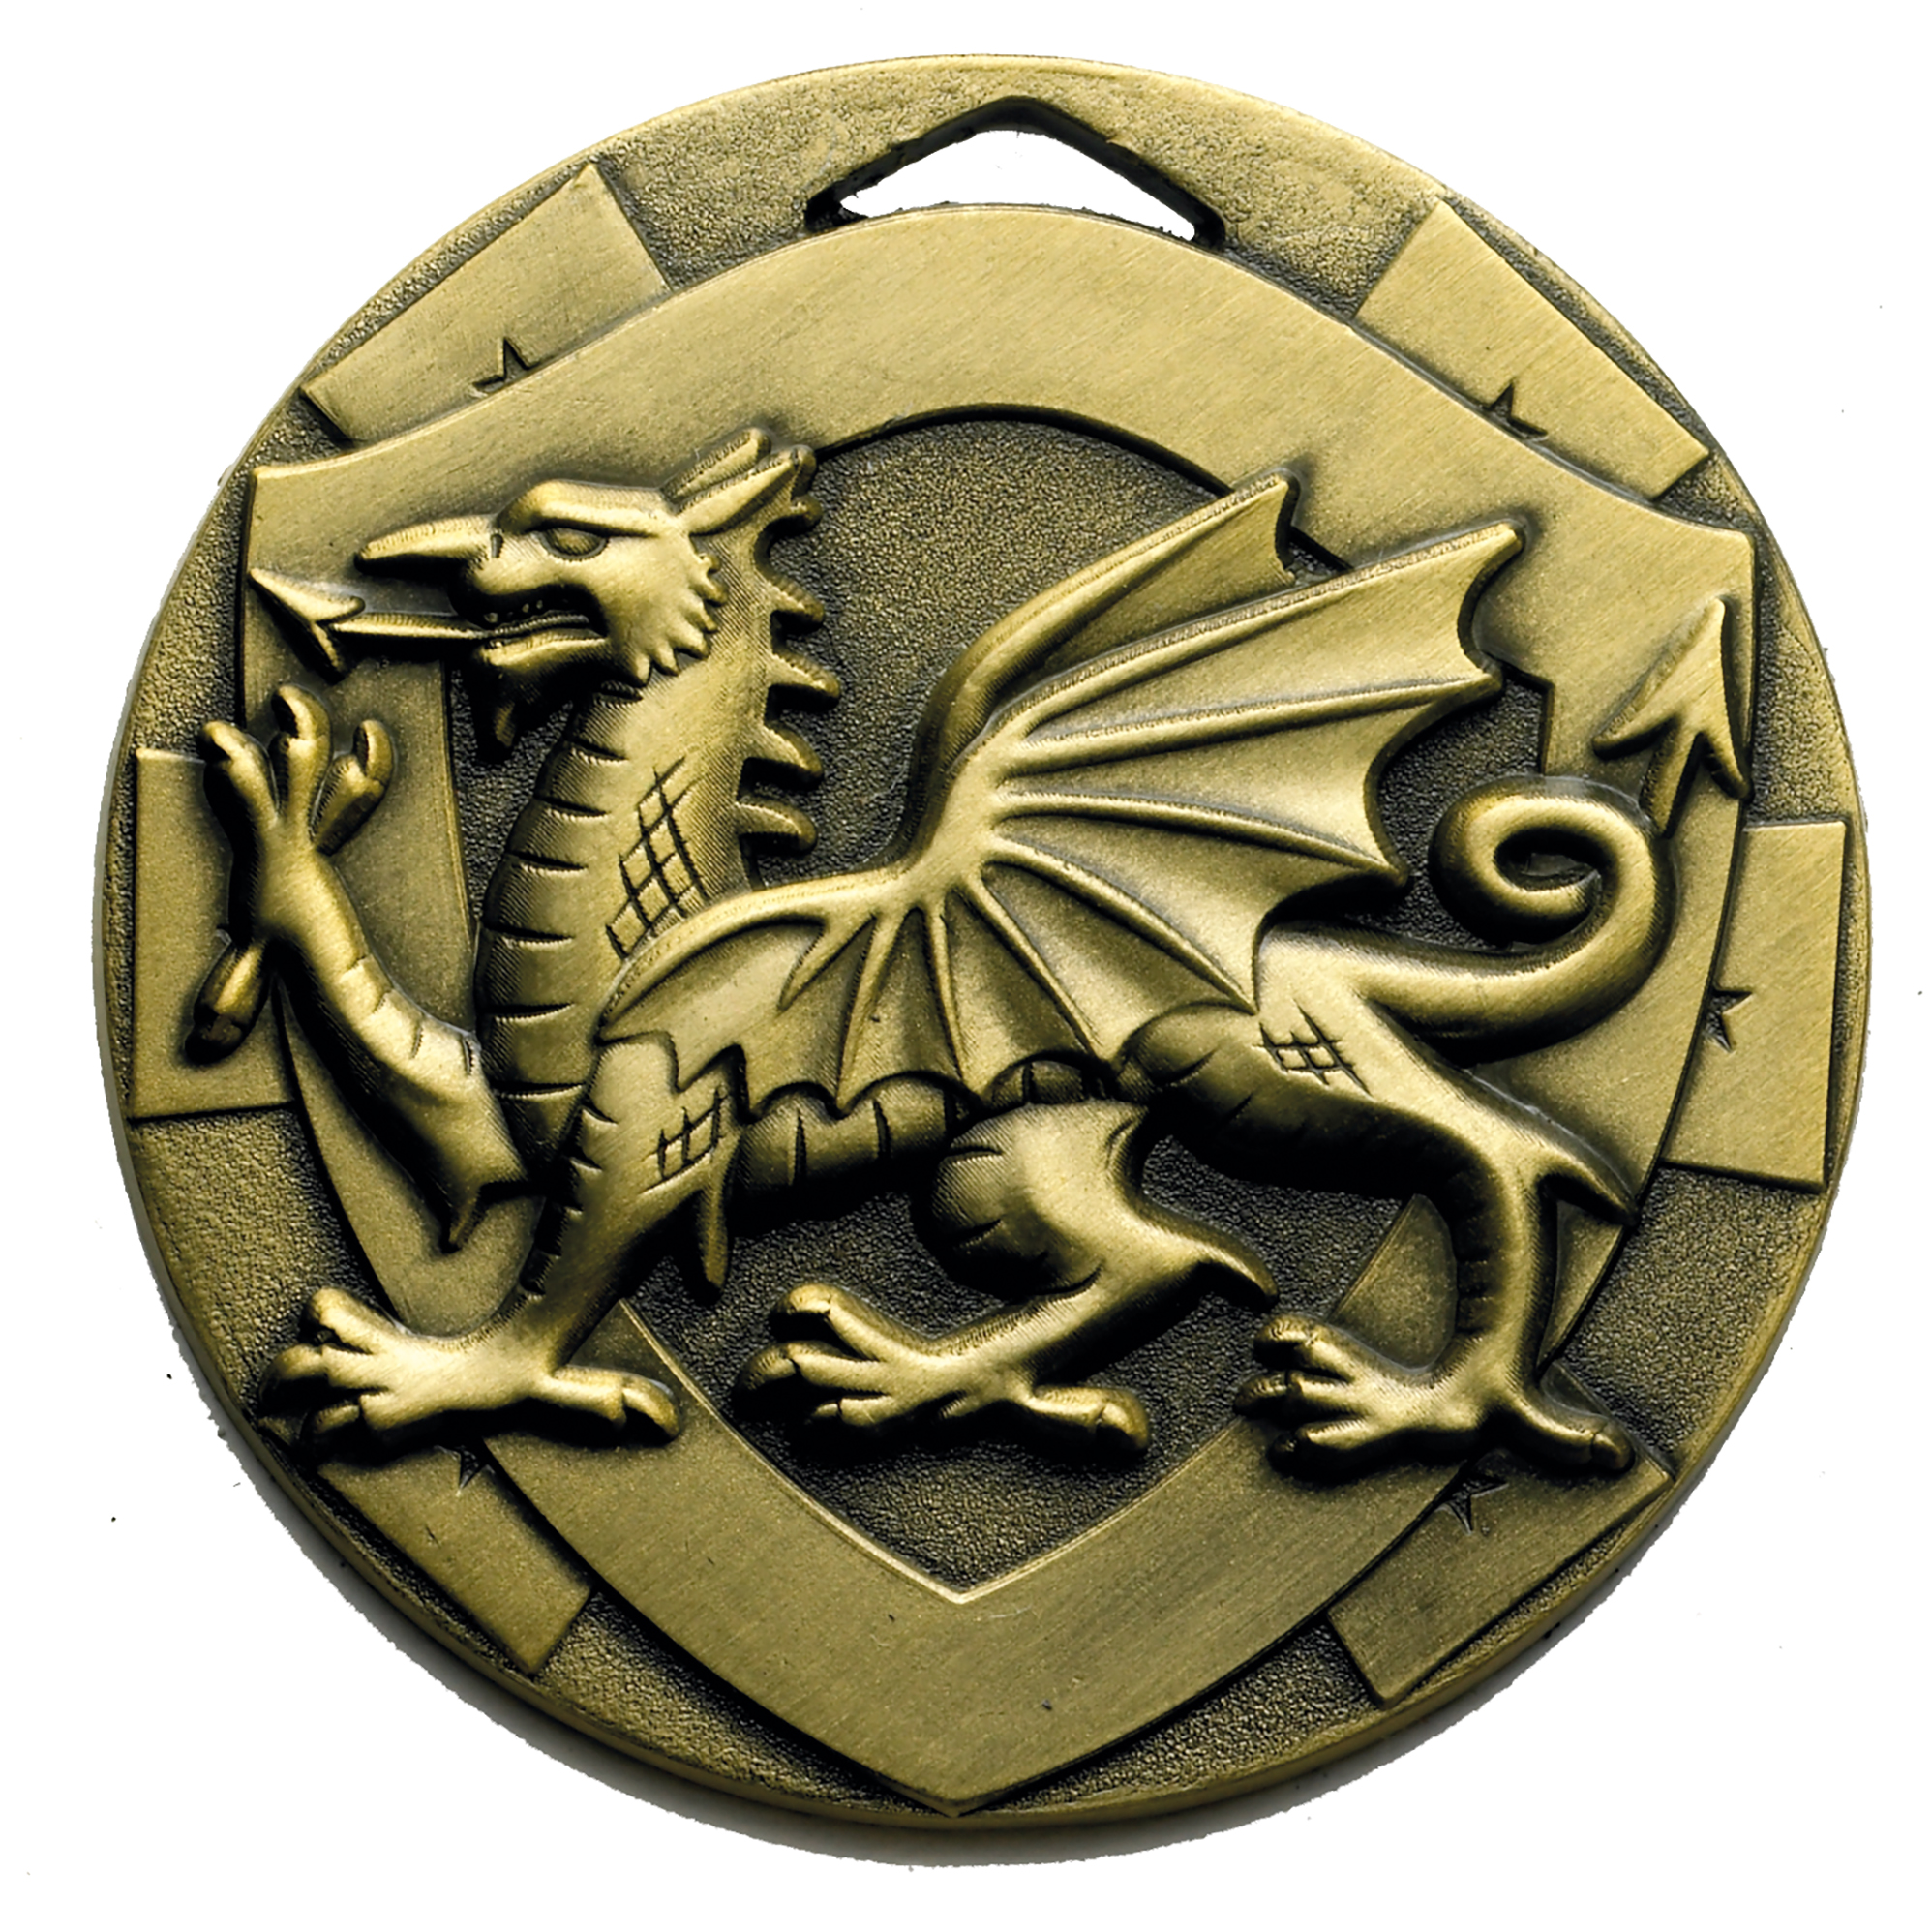 Welsh Medals / Wales Medals